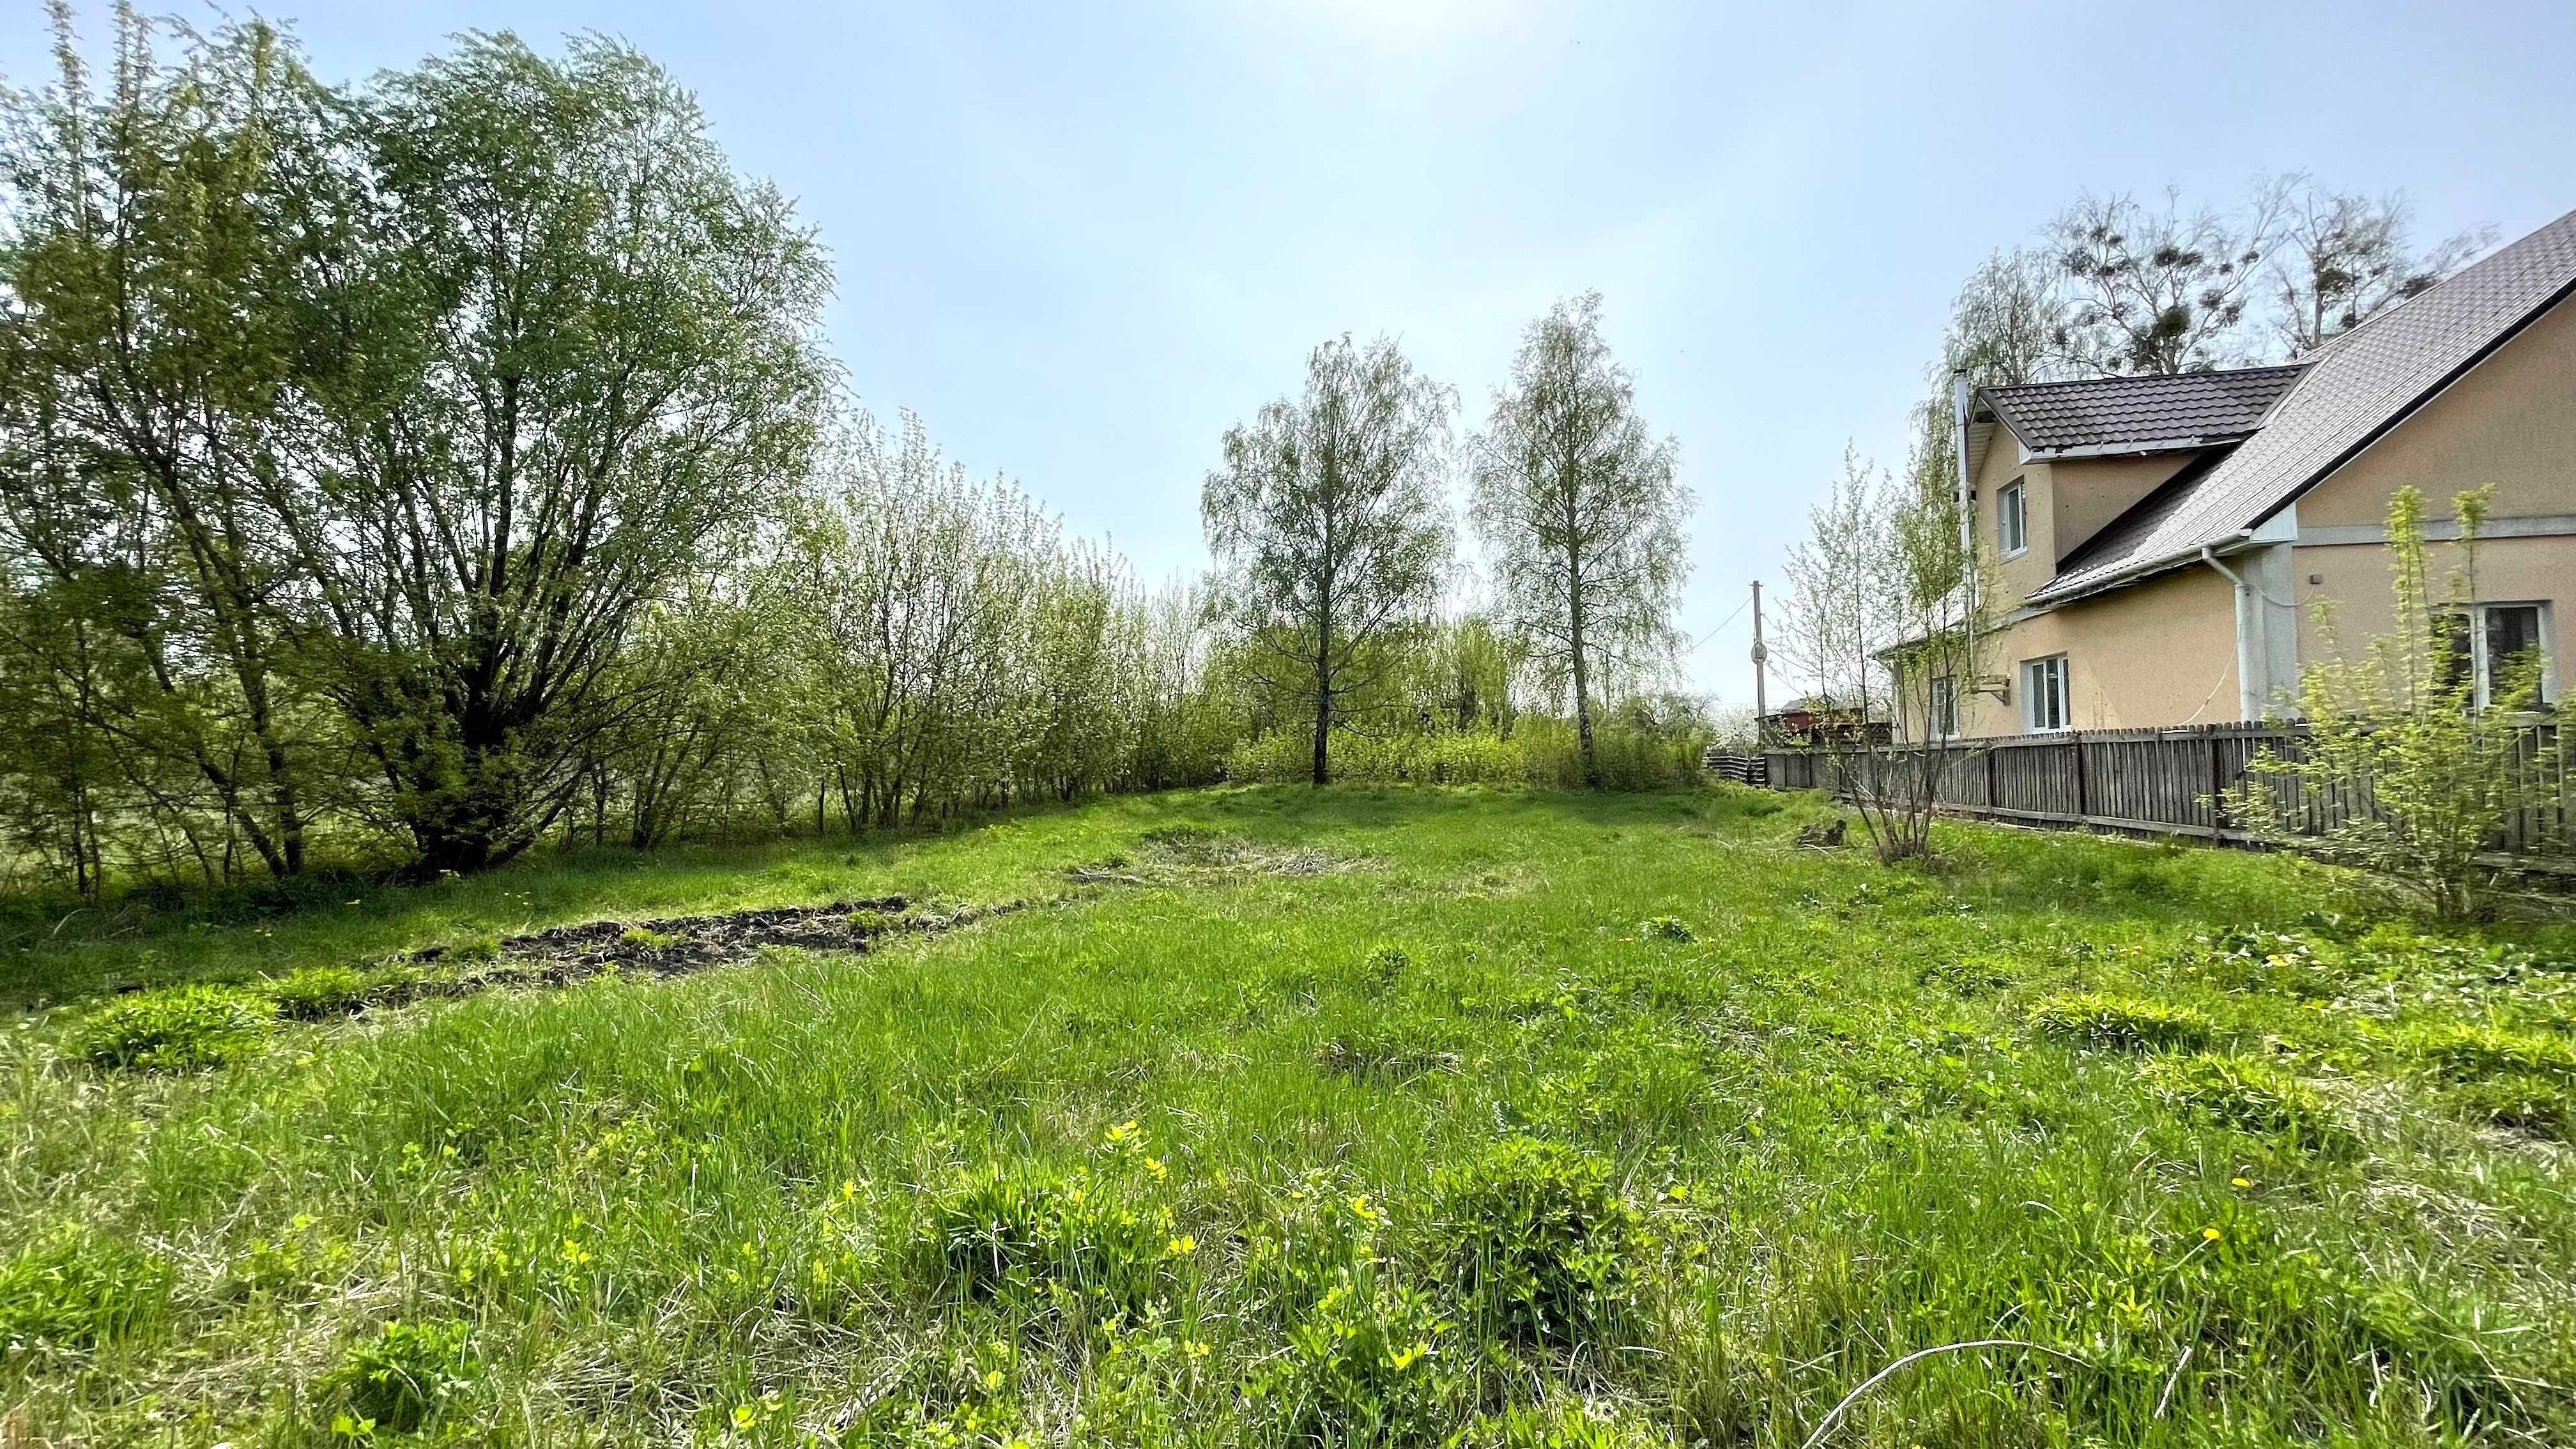 Продаж земельної ділянки біля ЖК Покровський, Гостомель,Буча.